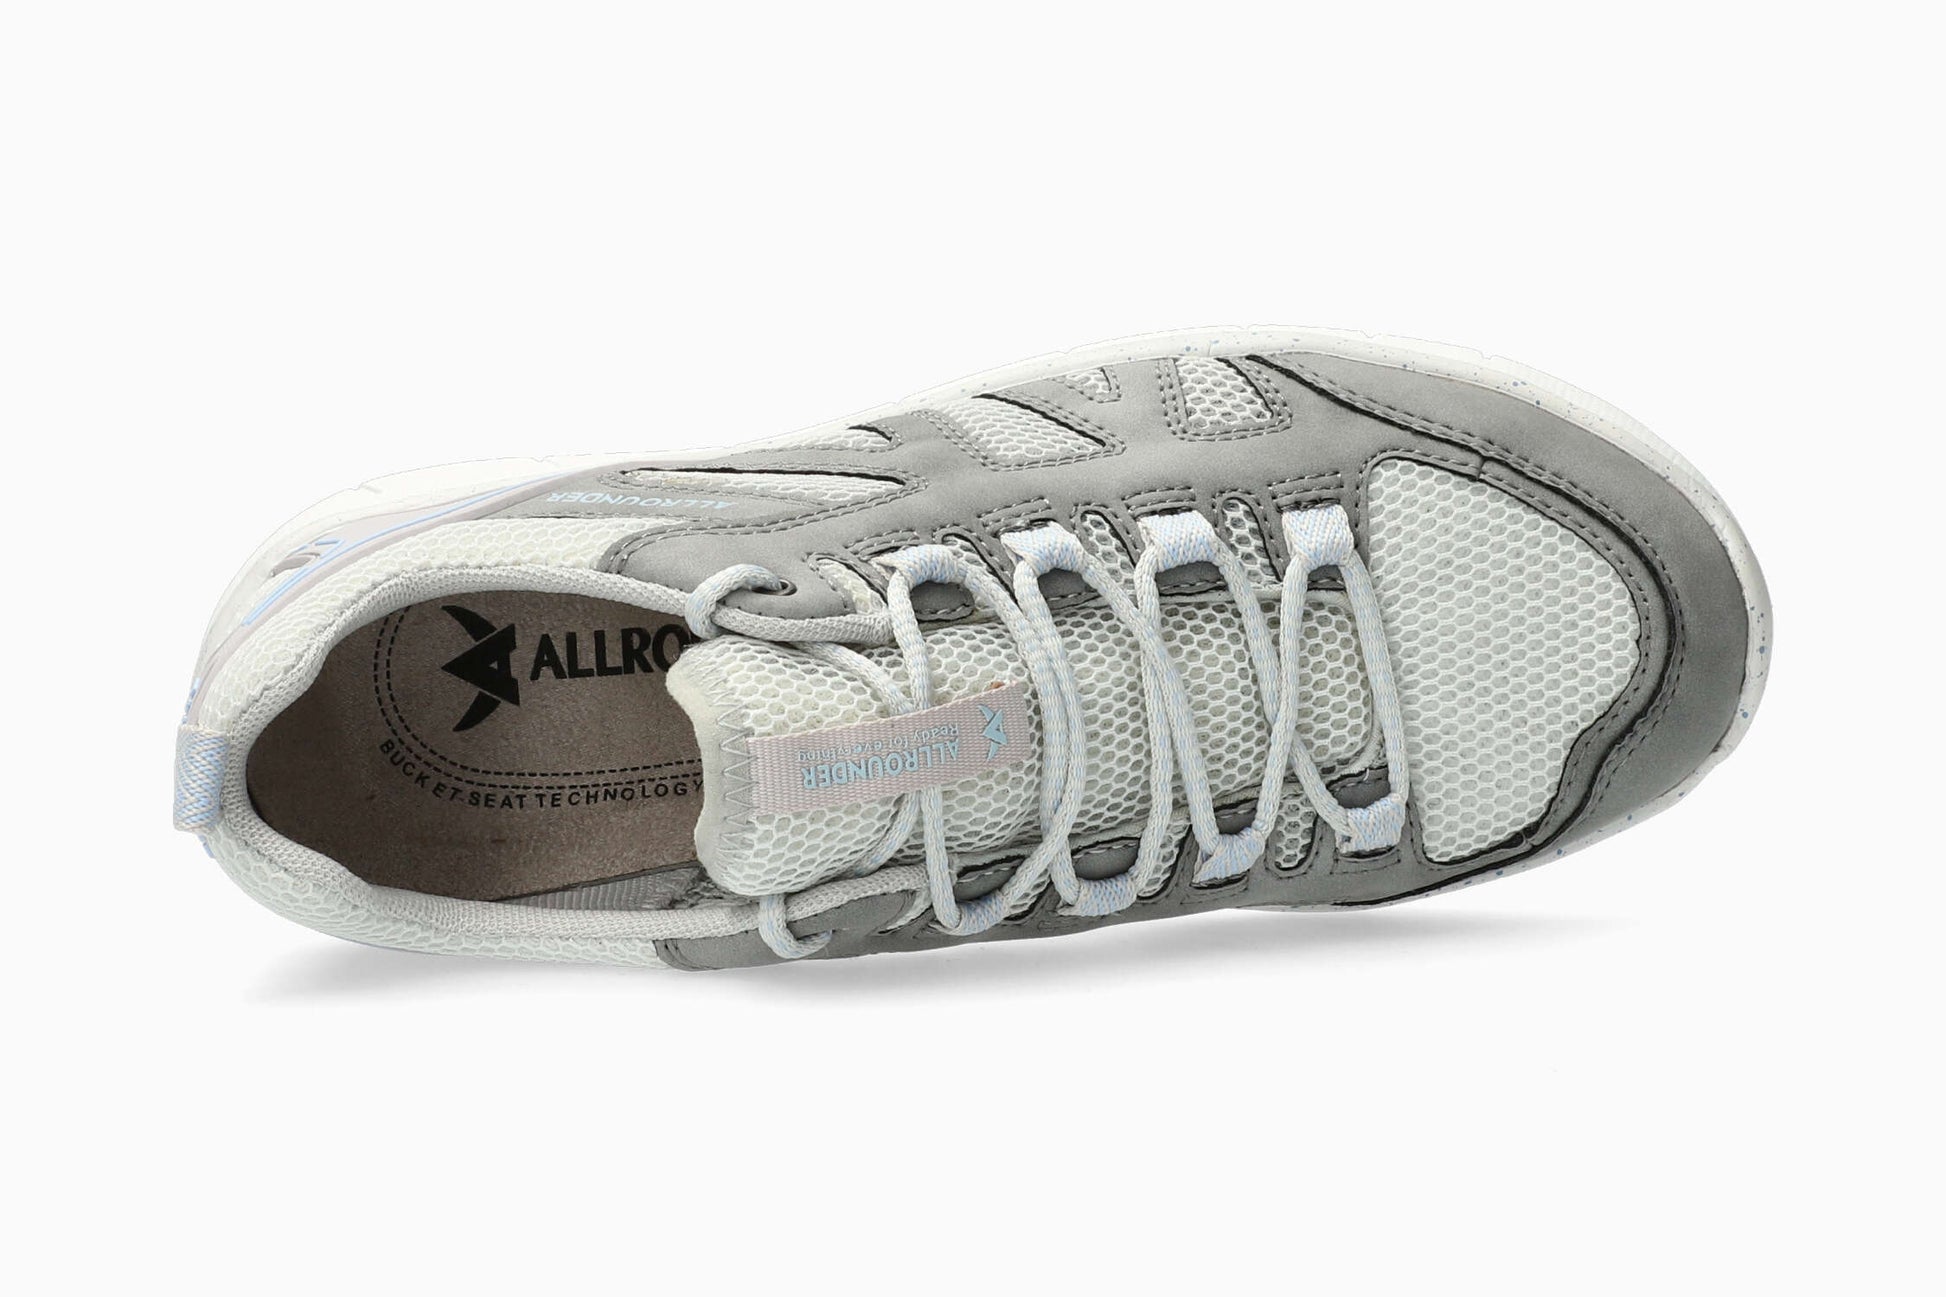 Allrounder Lugana Light Grey Women's Sneaker Top